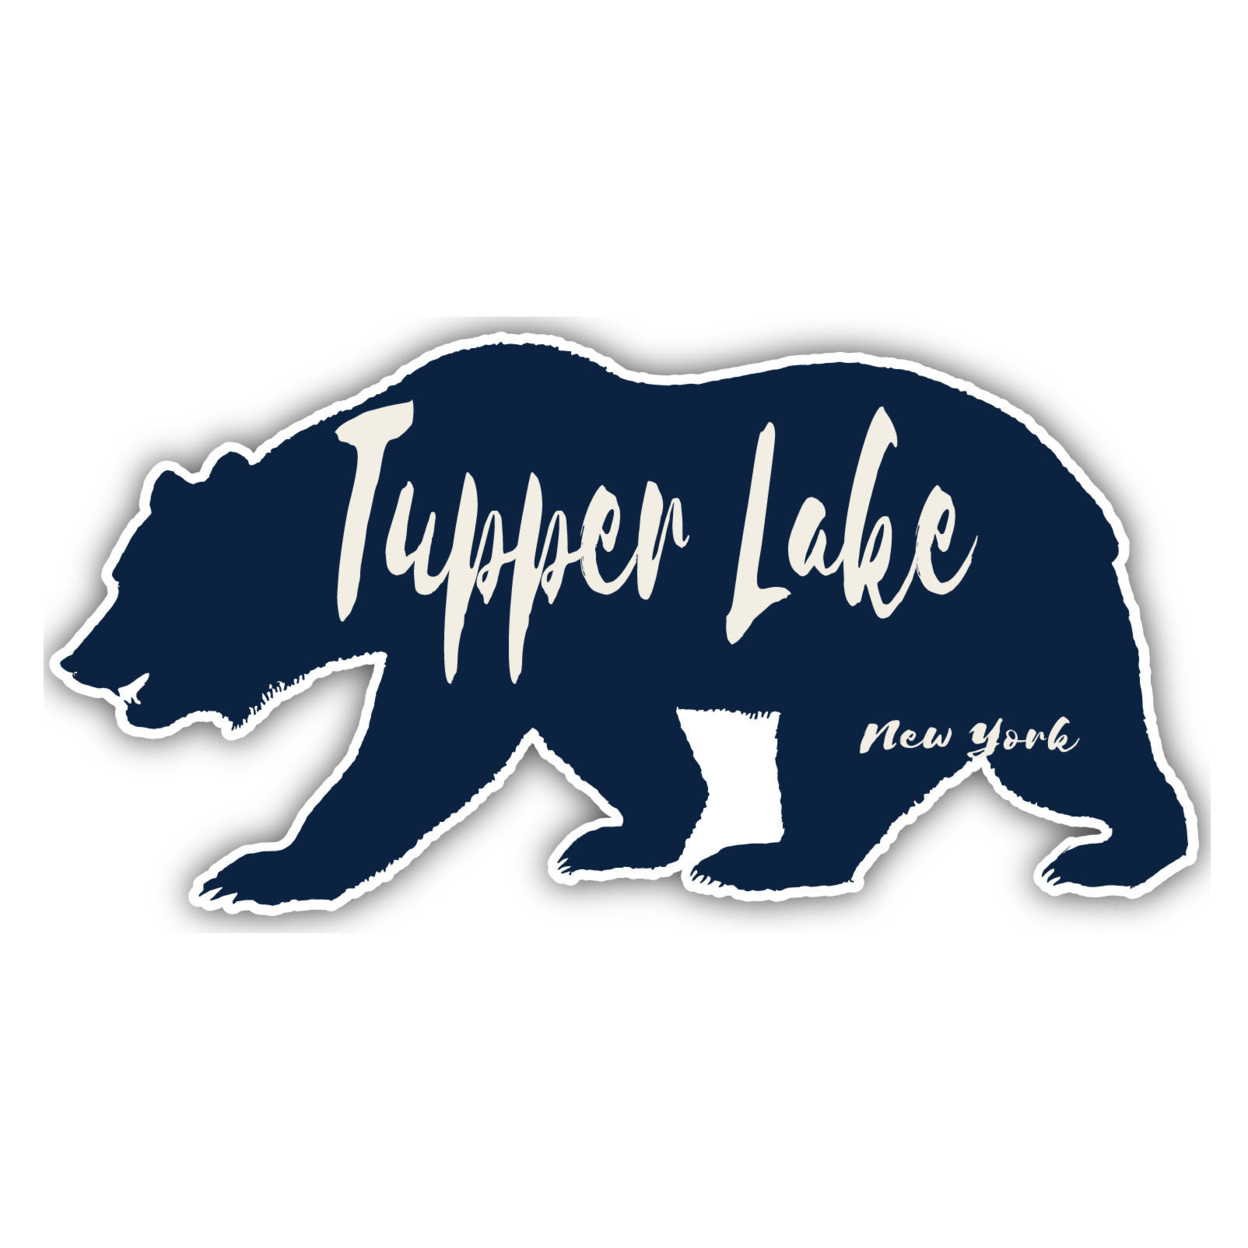 Tupper Lake New York Souvenir Decorative Stickers (Choose Theme And Size) - Single Unit, 2-Inch, Tent